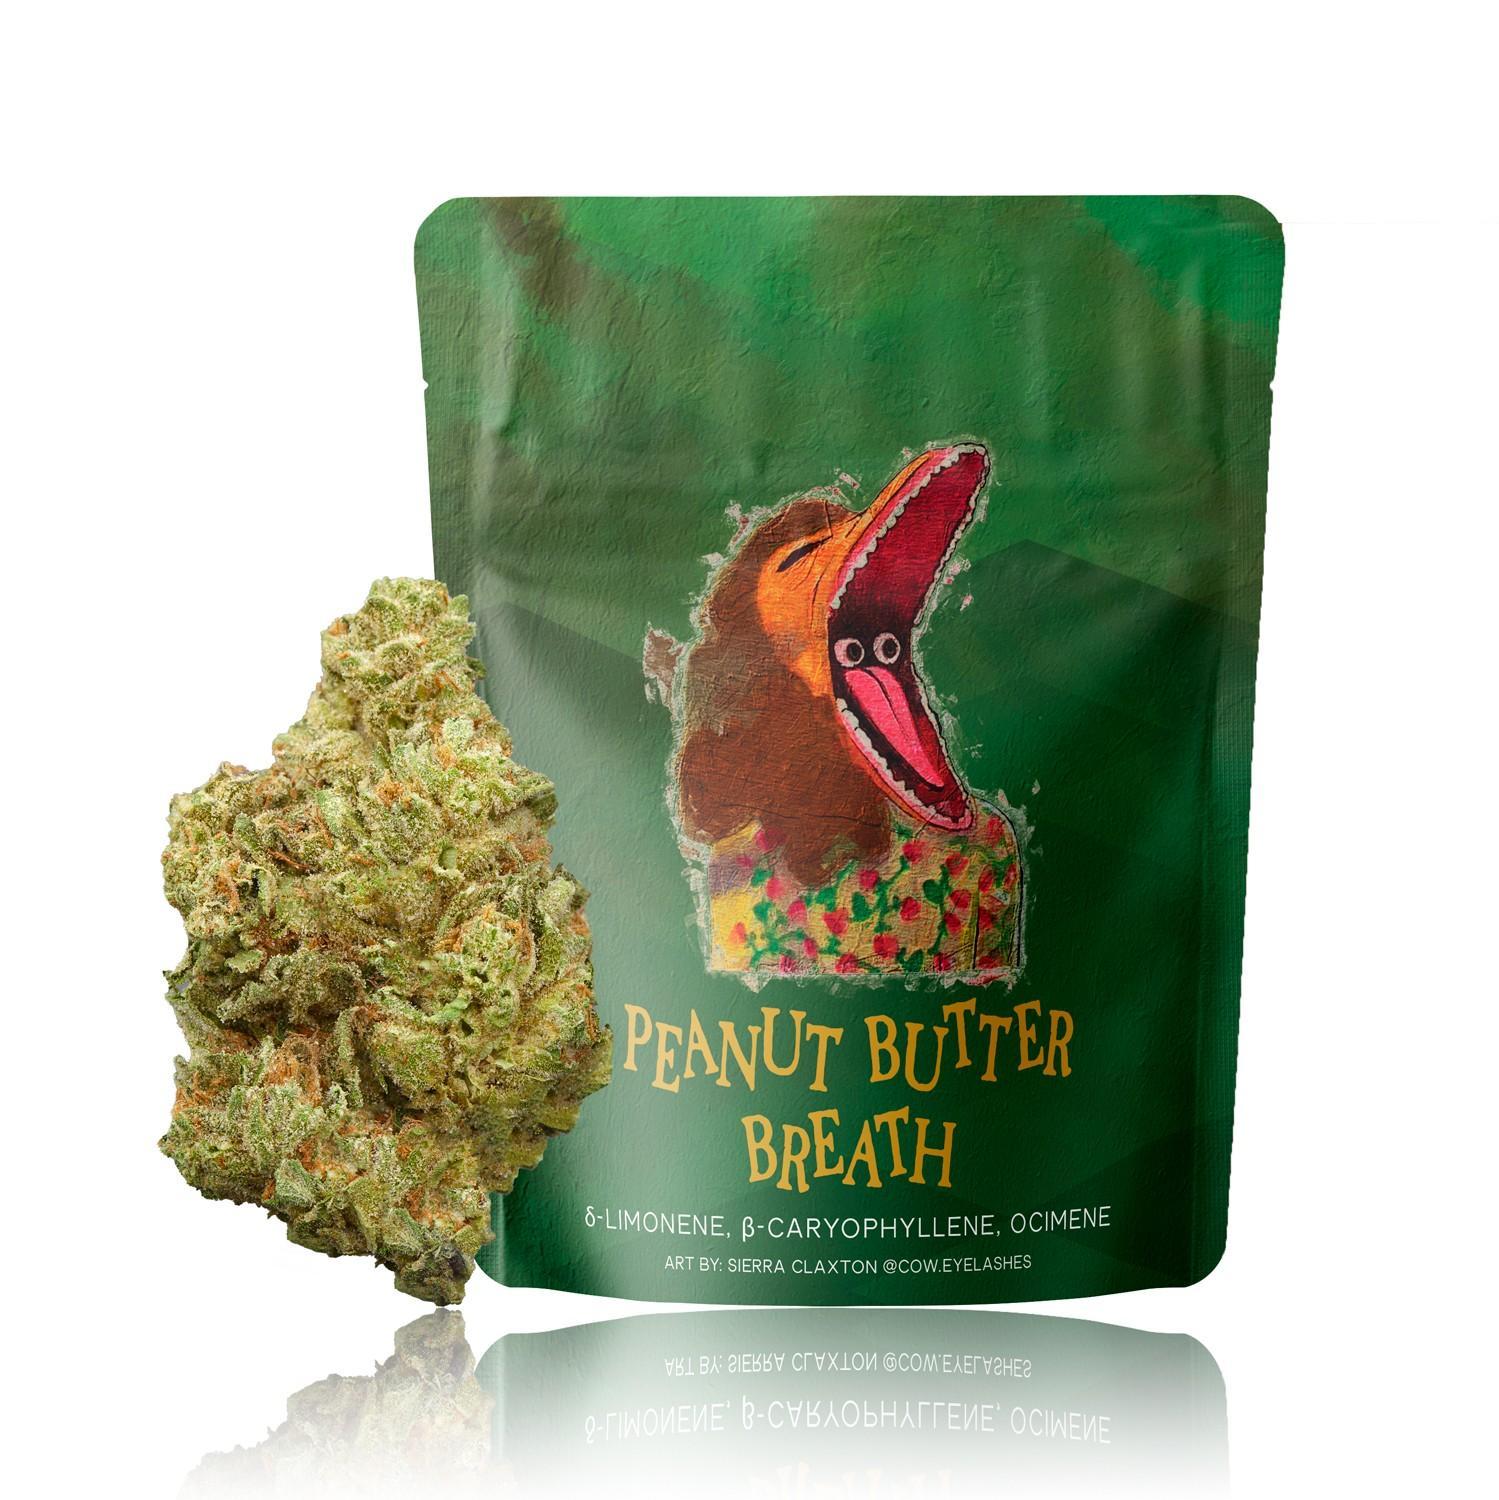 Foxworth Farms - Peanut Butter Breath - Cannabis